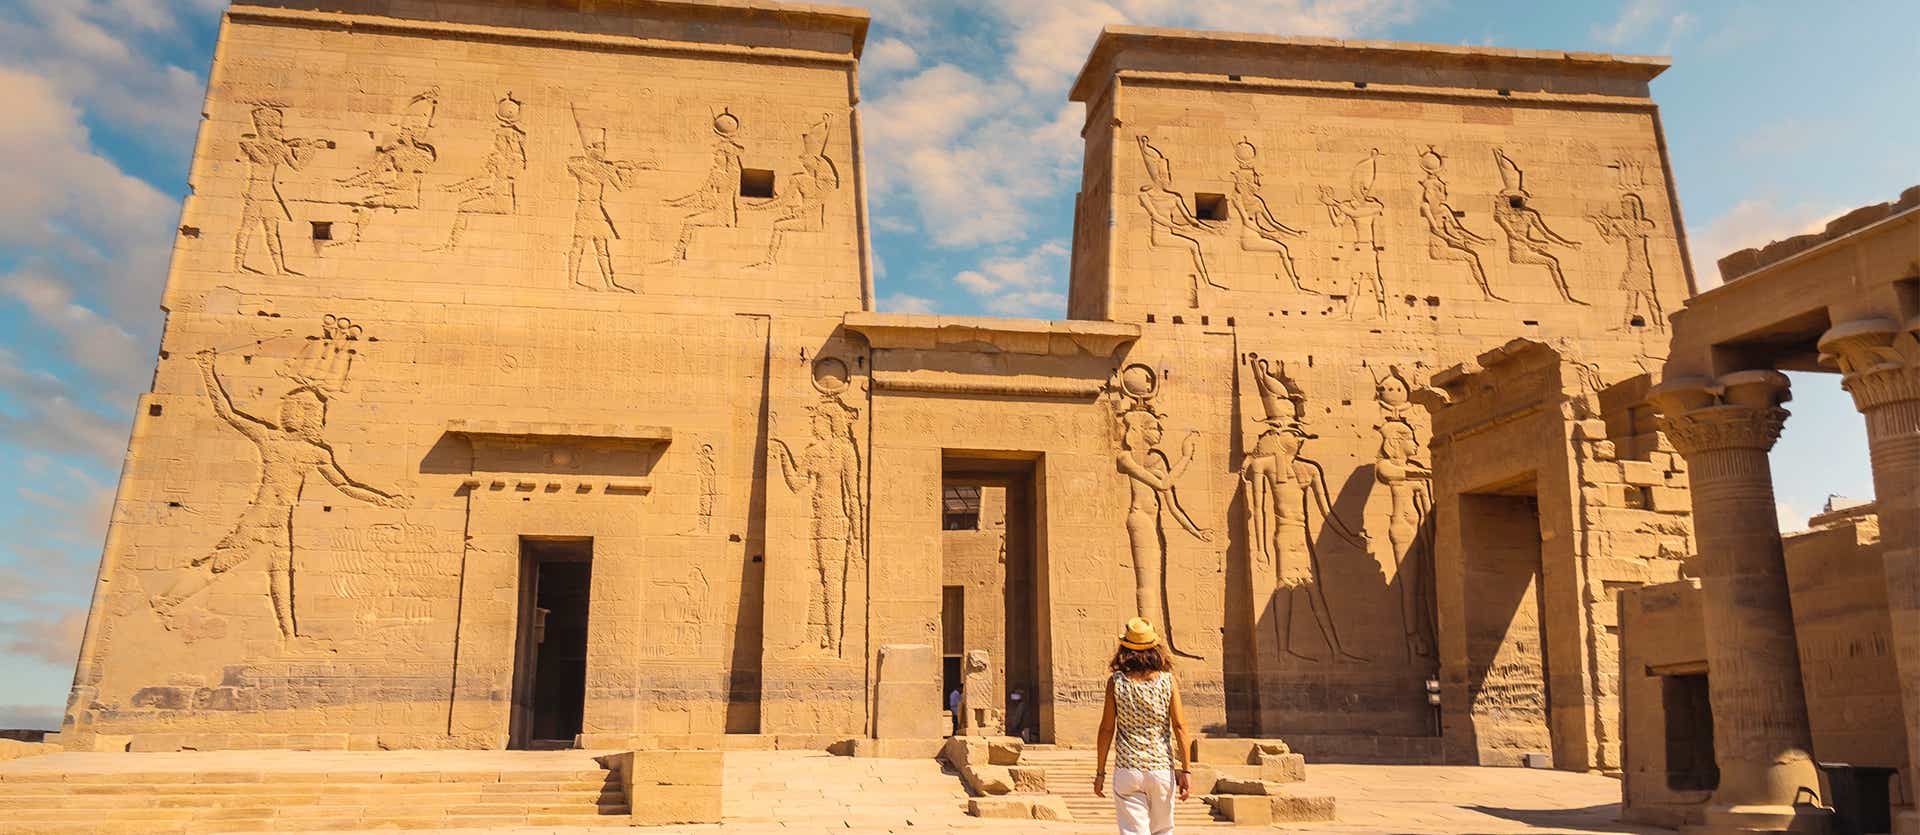 Temple of Philae <span class="iconos separador"></span> Aswan <span class="iconos separador"></span> Egypt